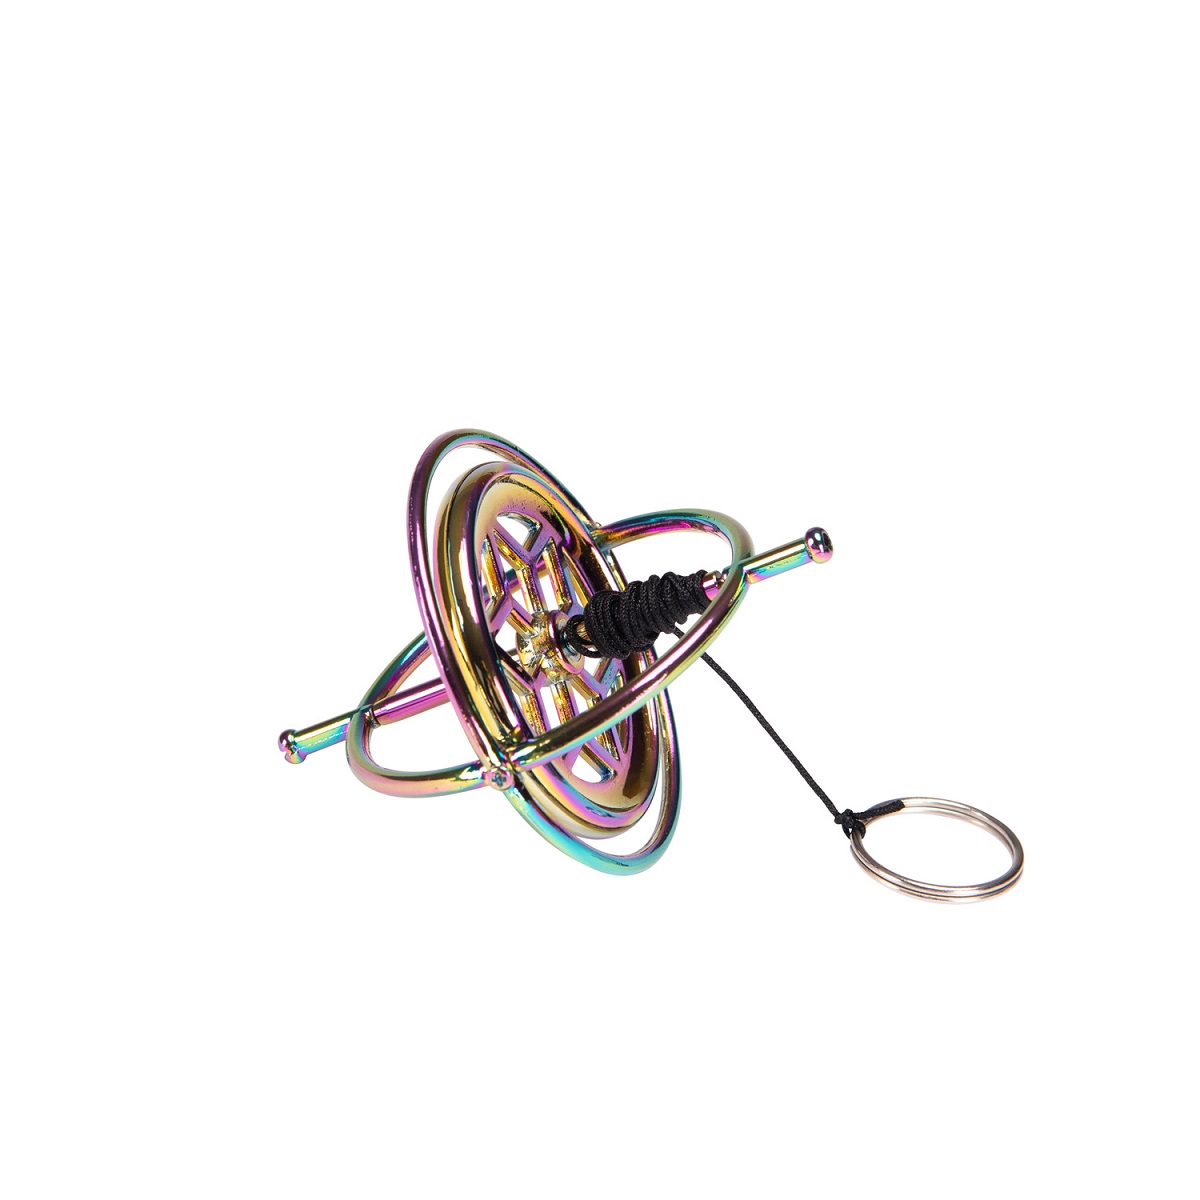 Petites Merveilles - Gyroscope Spinning-Top